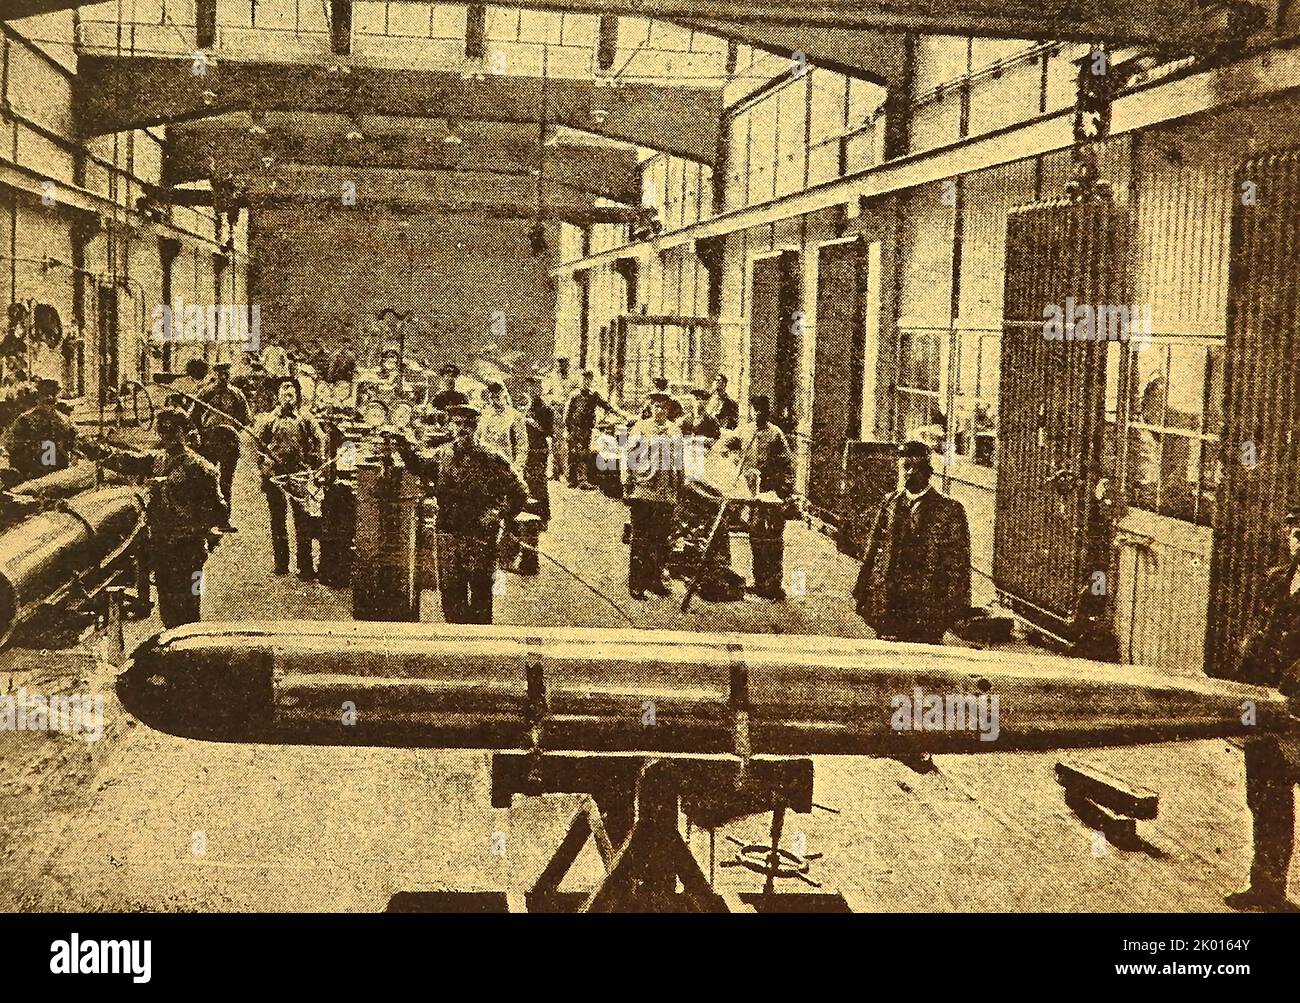 Trabajadores de municiones Primera Guerra Mundial - dentro de una fábrica de torpedos alemana. --------------- Munitionsarbeiter Ersten Weltkrieg - in einer deutschen Torpedofabrik. Foto de stock